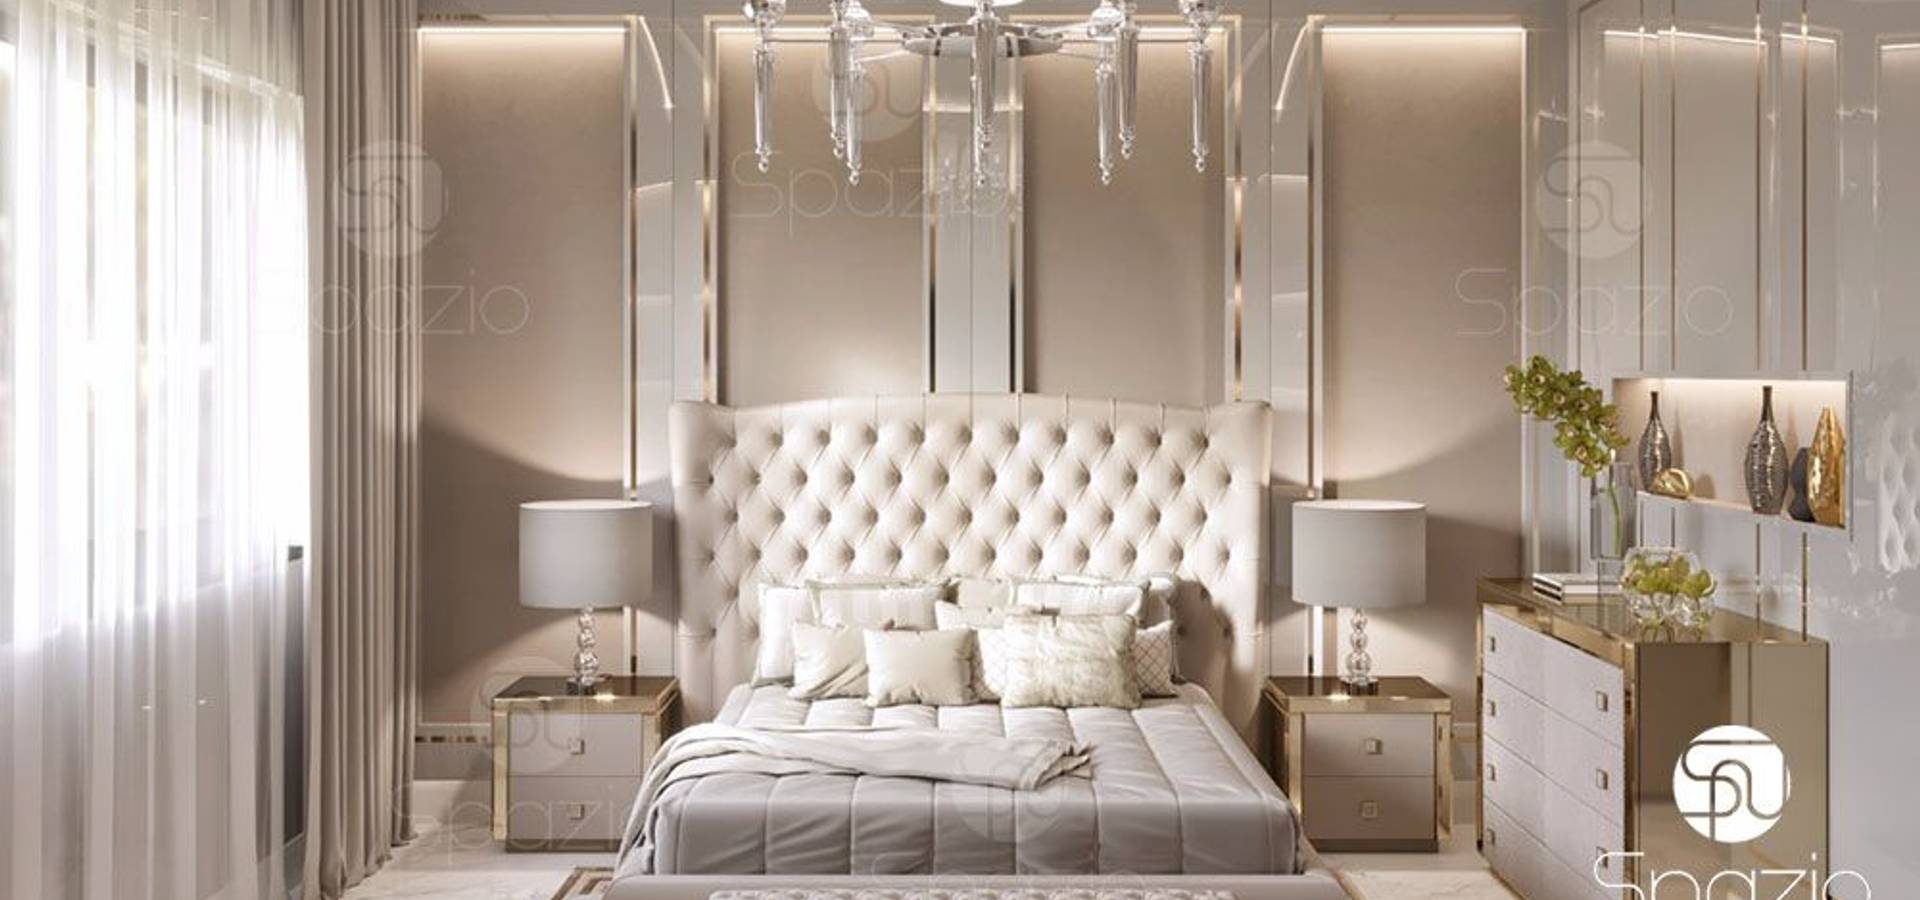 Luxury modern Master bedroom interior design and decor in ...